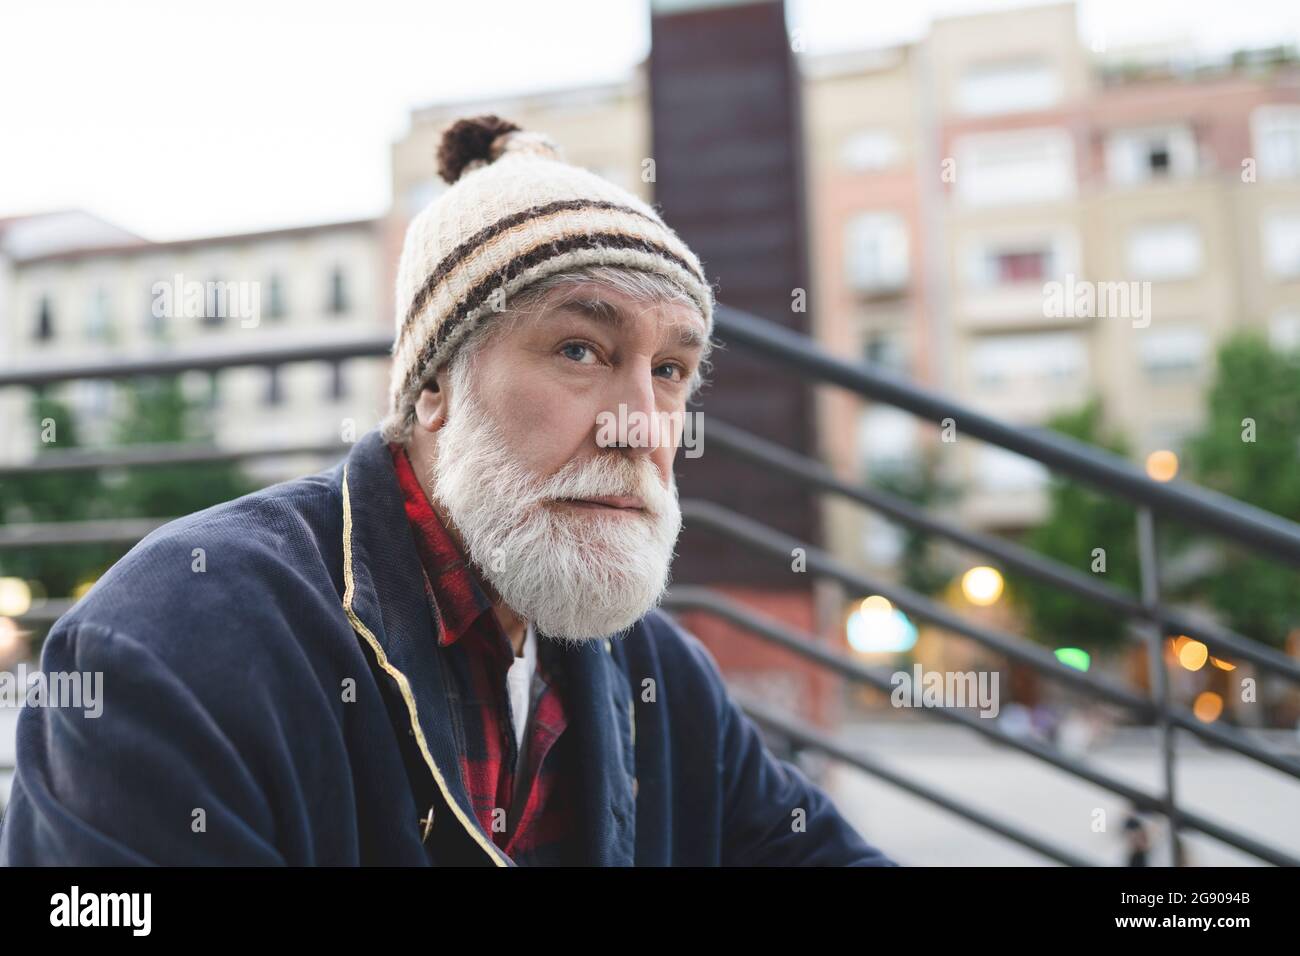 Mature man with white beard wearing knit hat Stock Photo